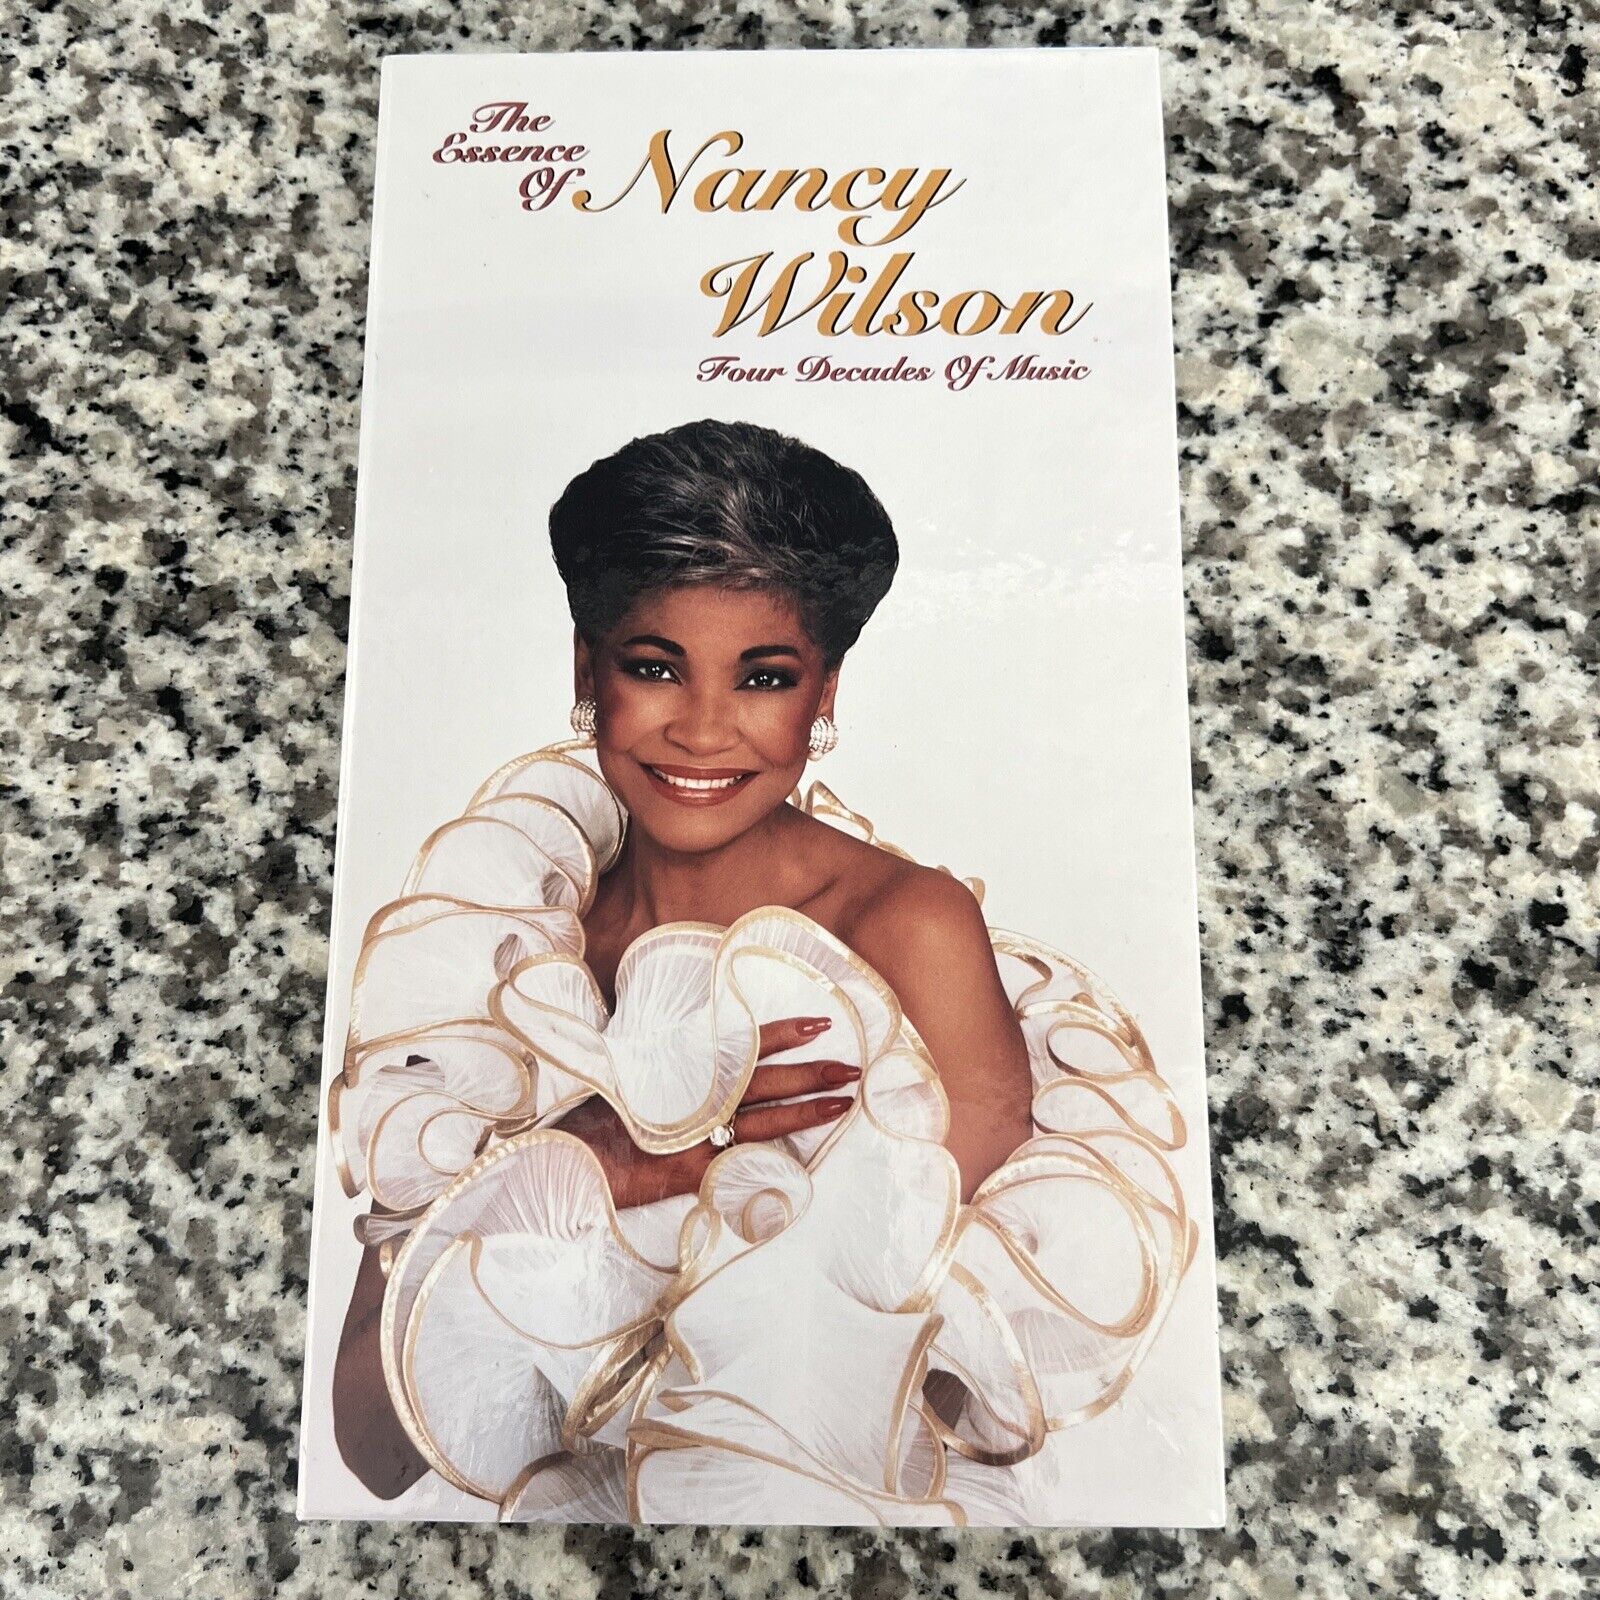 The Essence of Nancy Wilson: Four Decades of Music by Nancy Wilson 4 CD Box Set